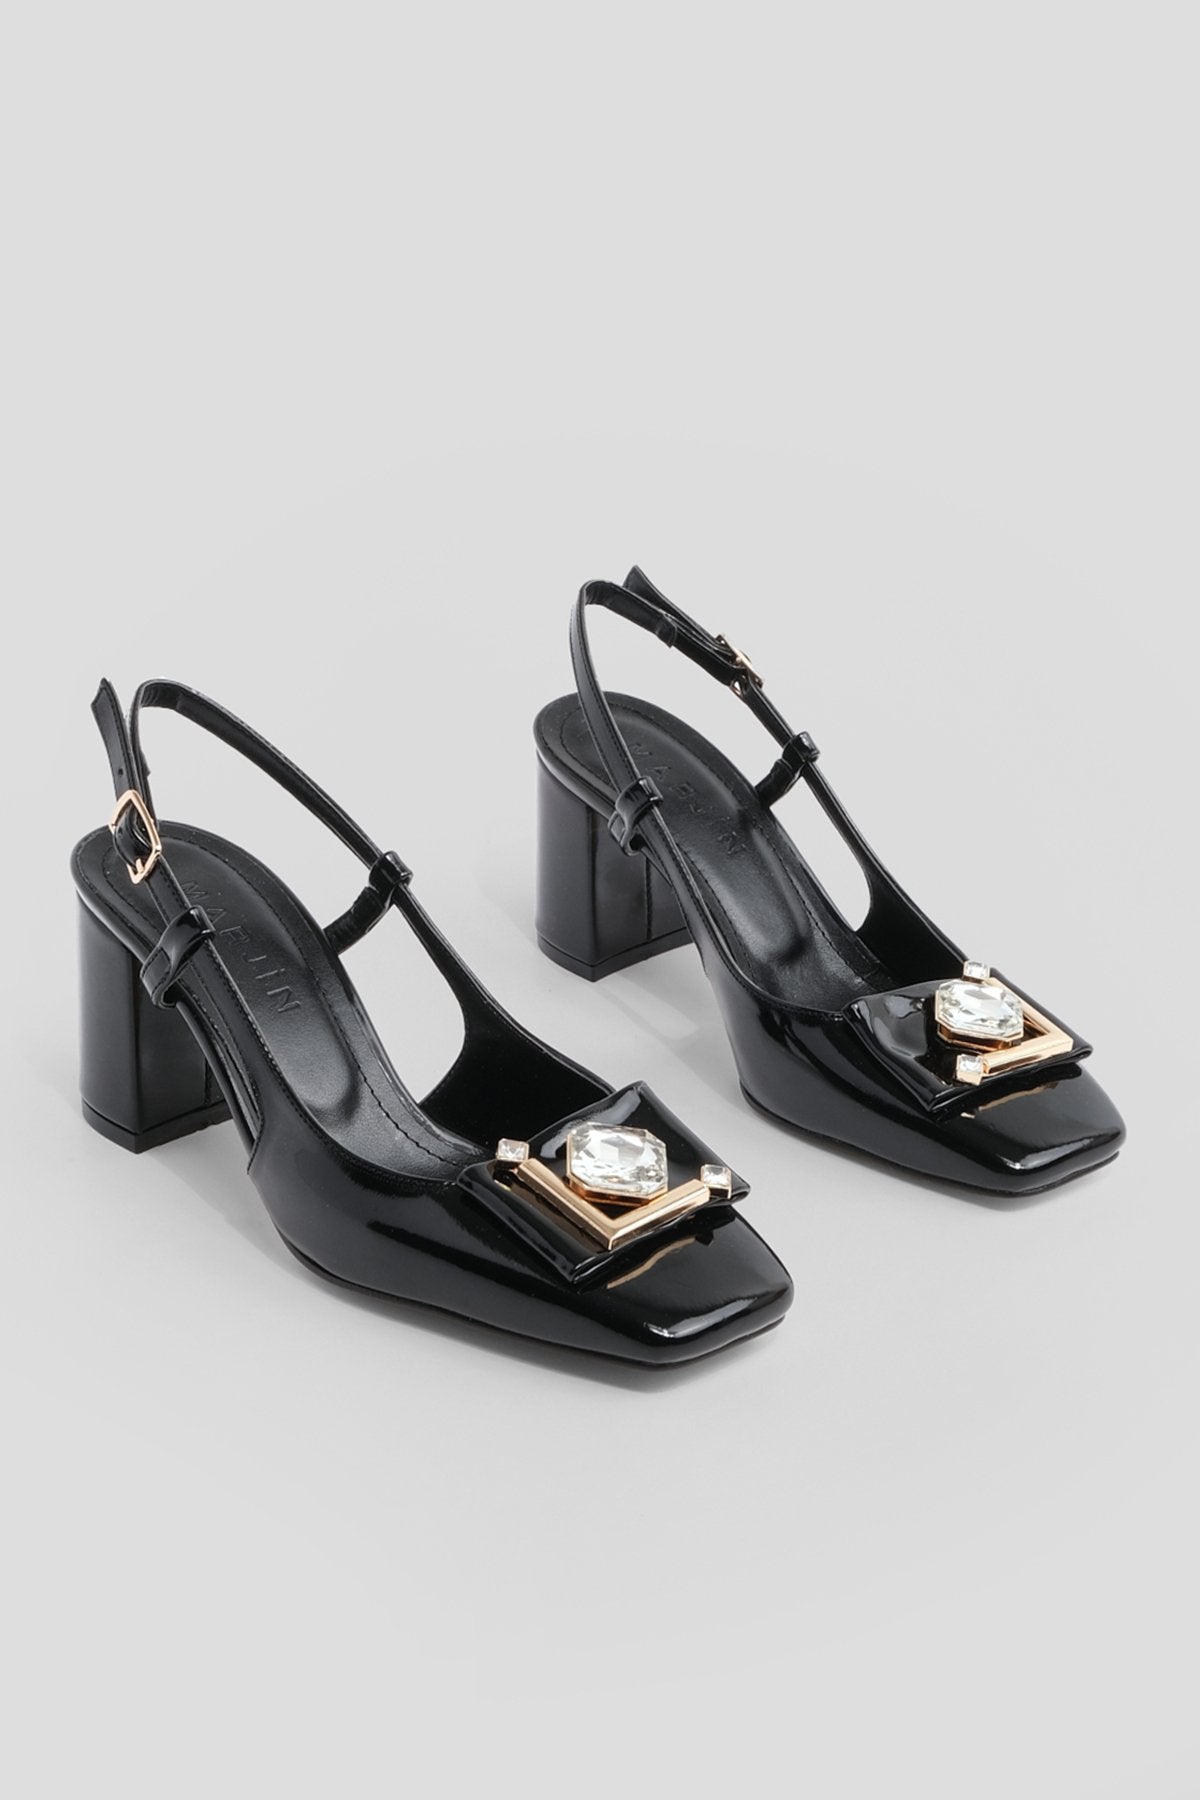 Women's Buckle Classic Heeled Shoes Eskas - Black Patent Leather - Lebbse